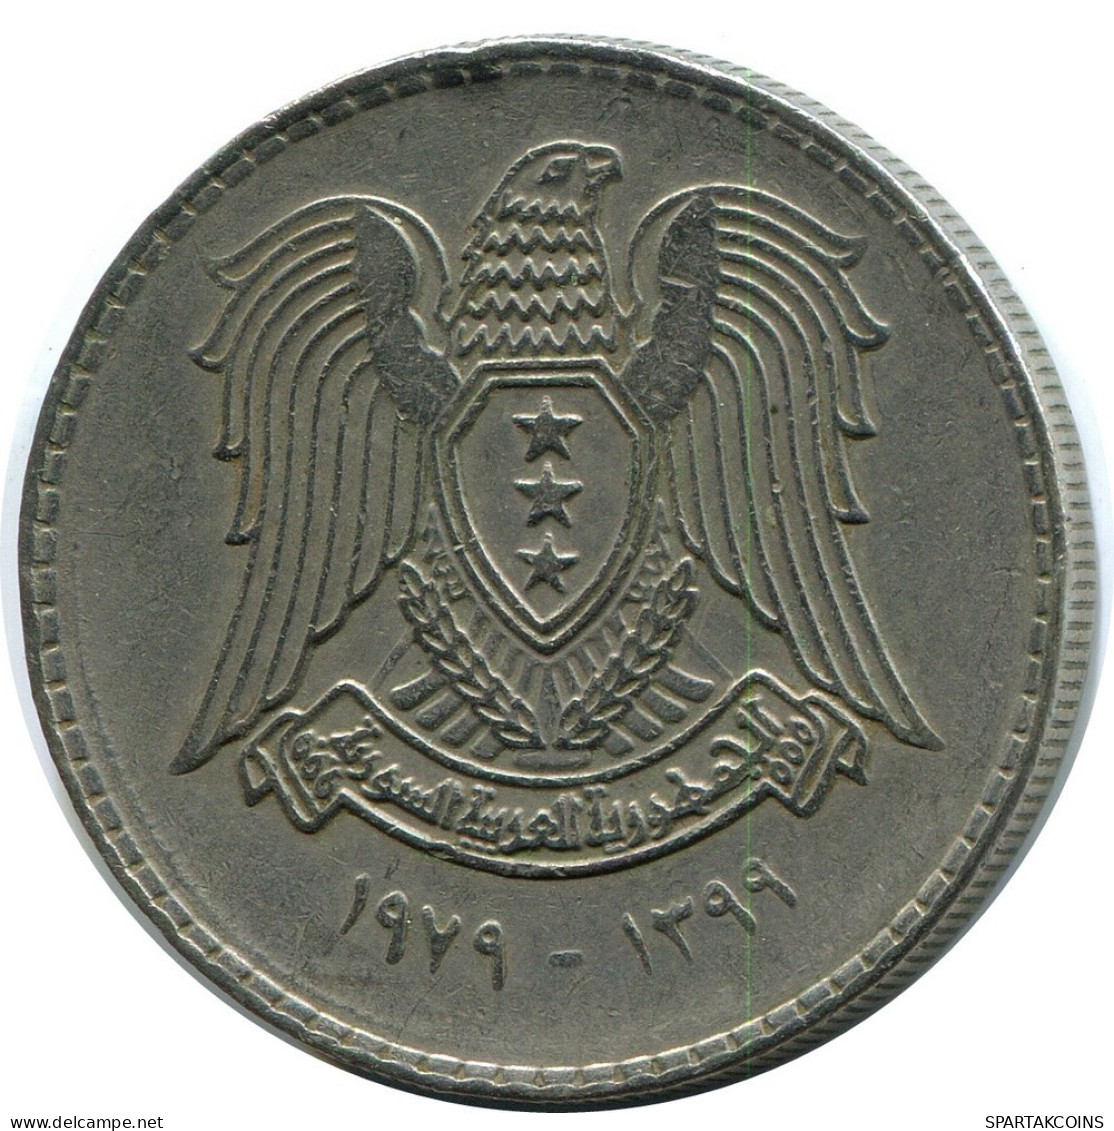 1 LIRA 1979 SYRIA Islamic Coin #AZ329.U.A - Syrien